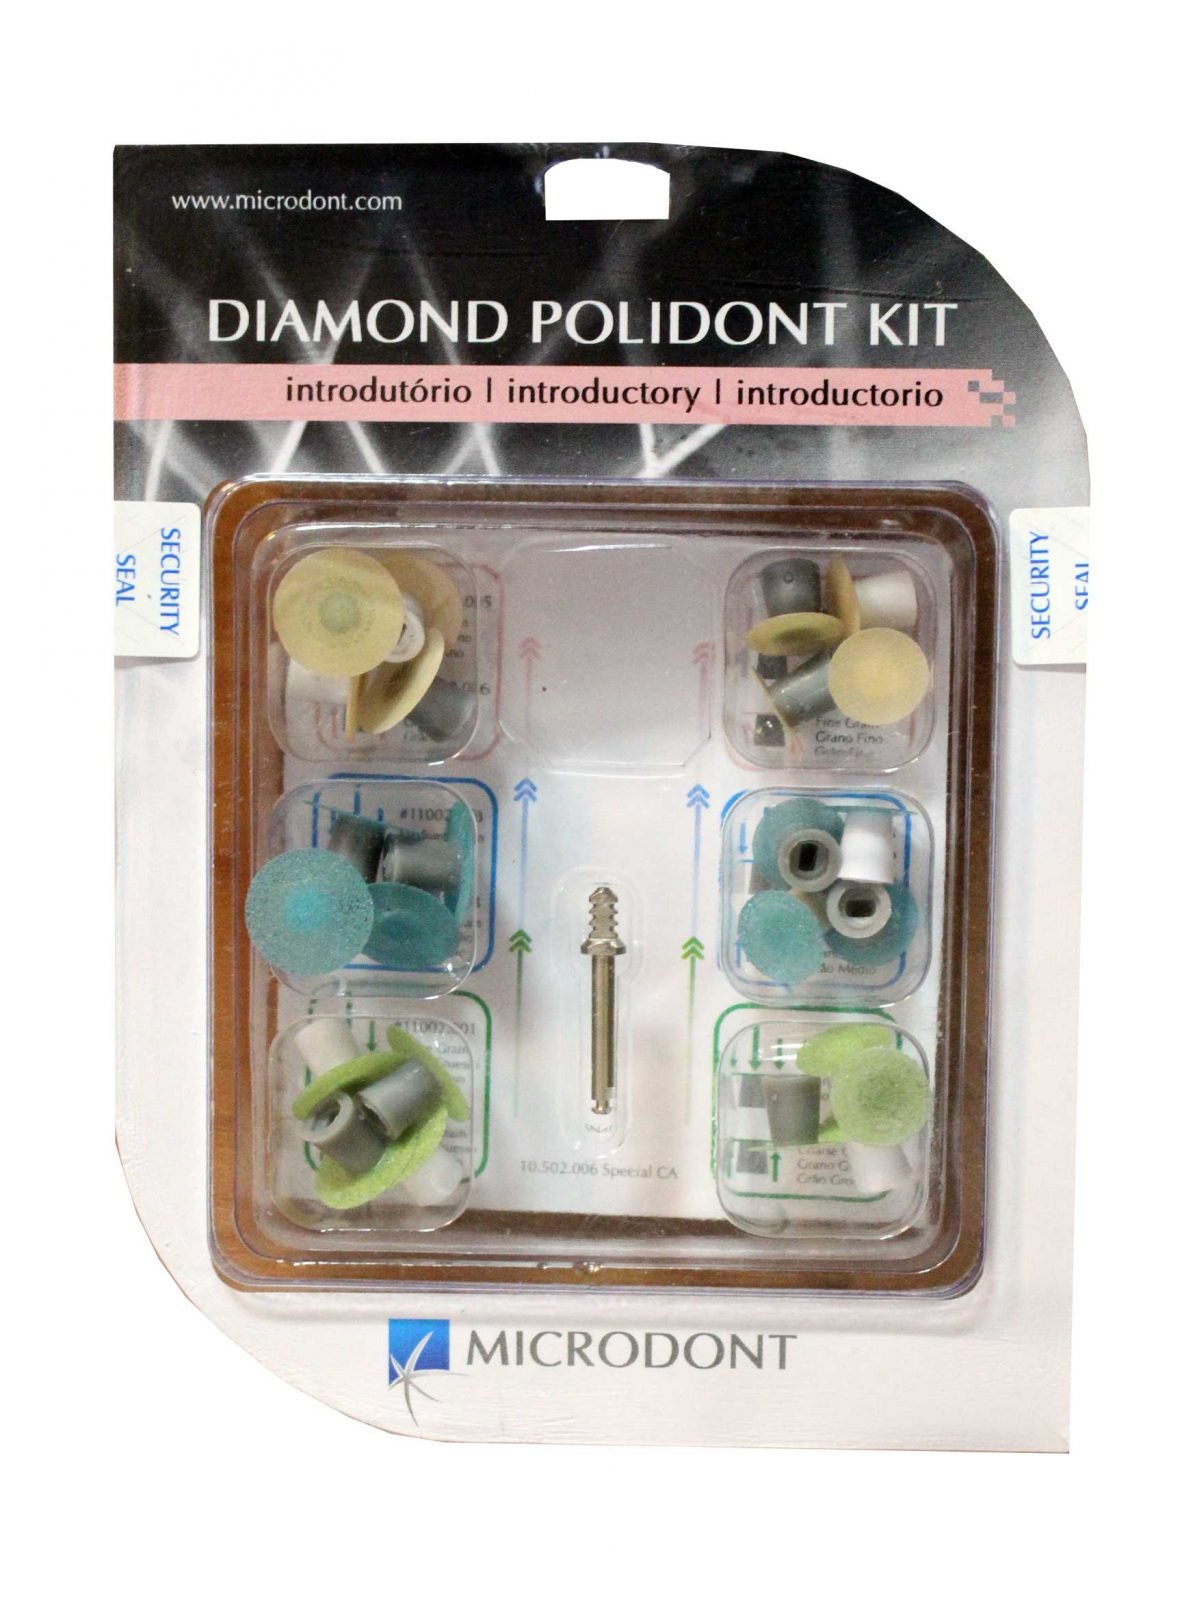 3 color diamond kit